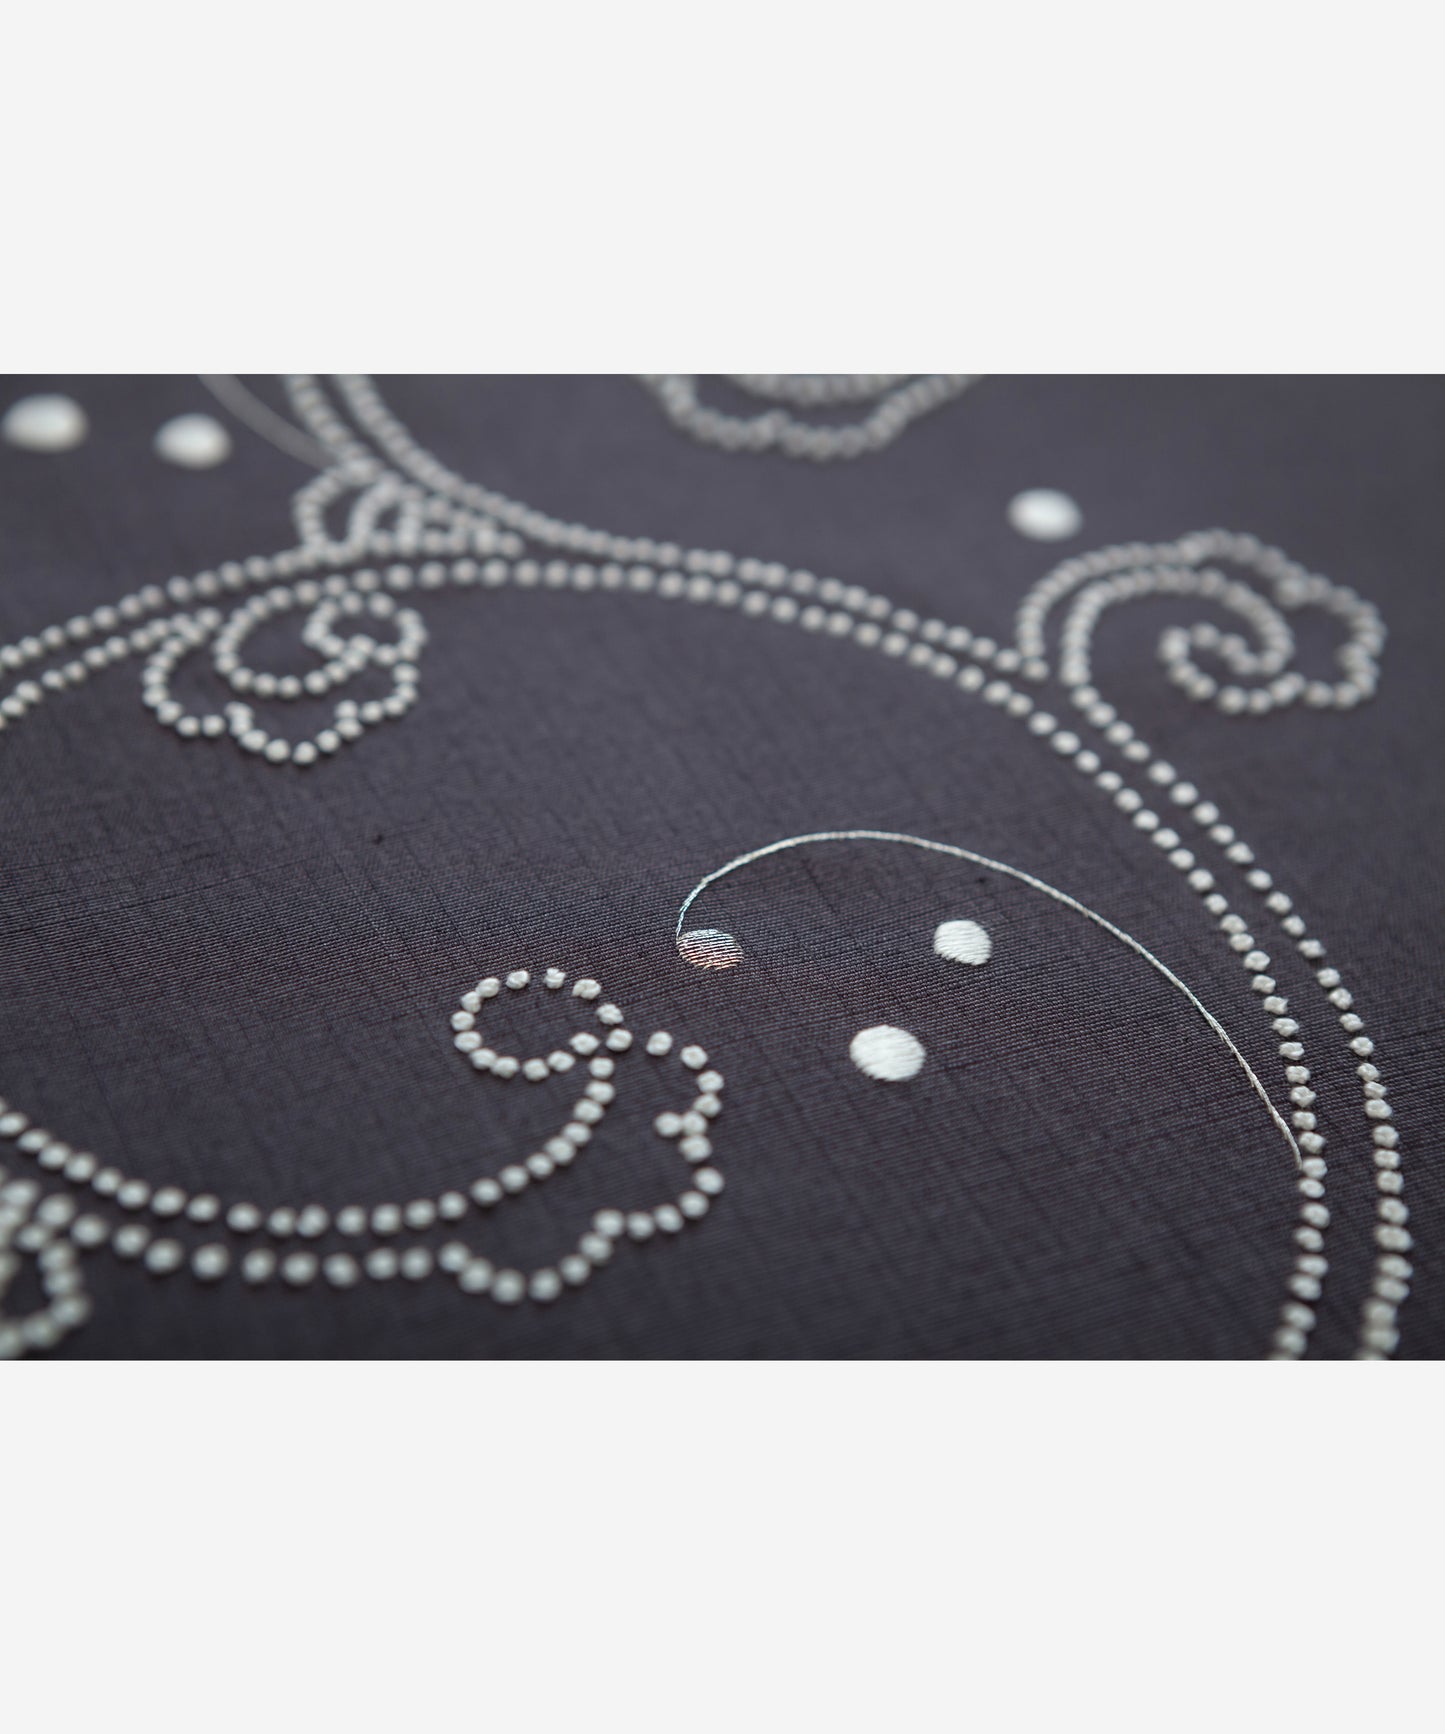 Sagara embroidery 9 inch Nagoya obi Nami Gashira arabesque 